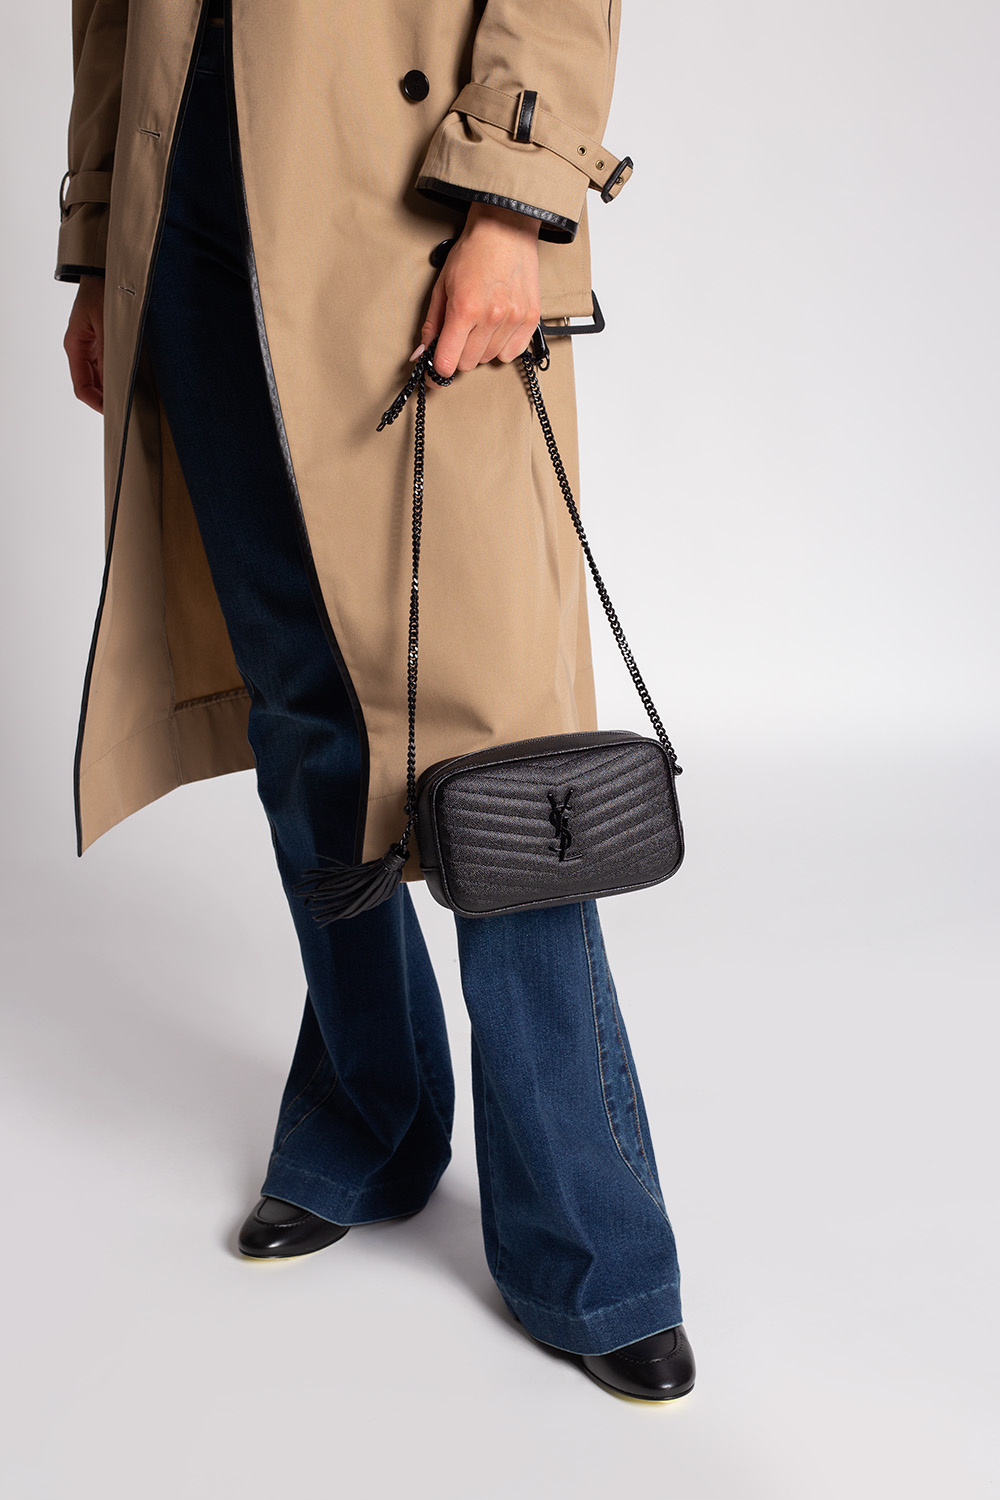 Yves Saint Laurent Lou Mini bag